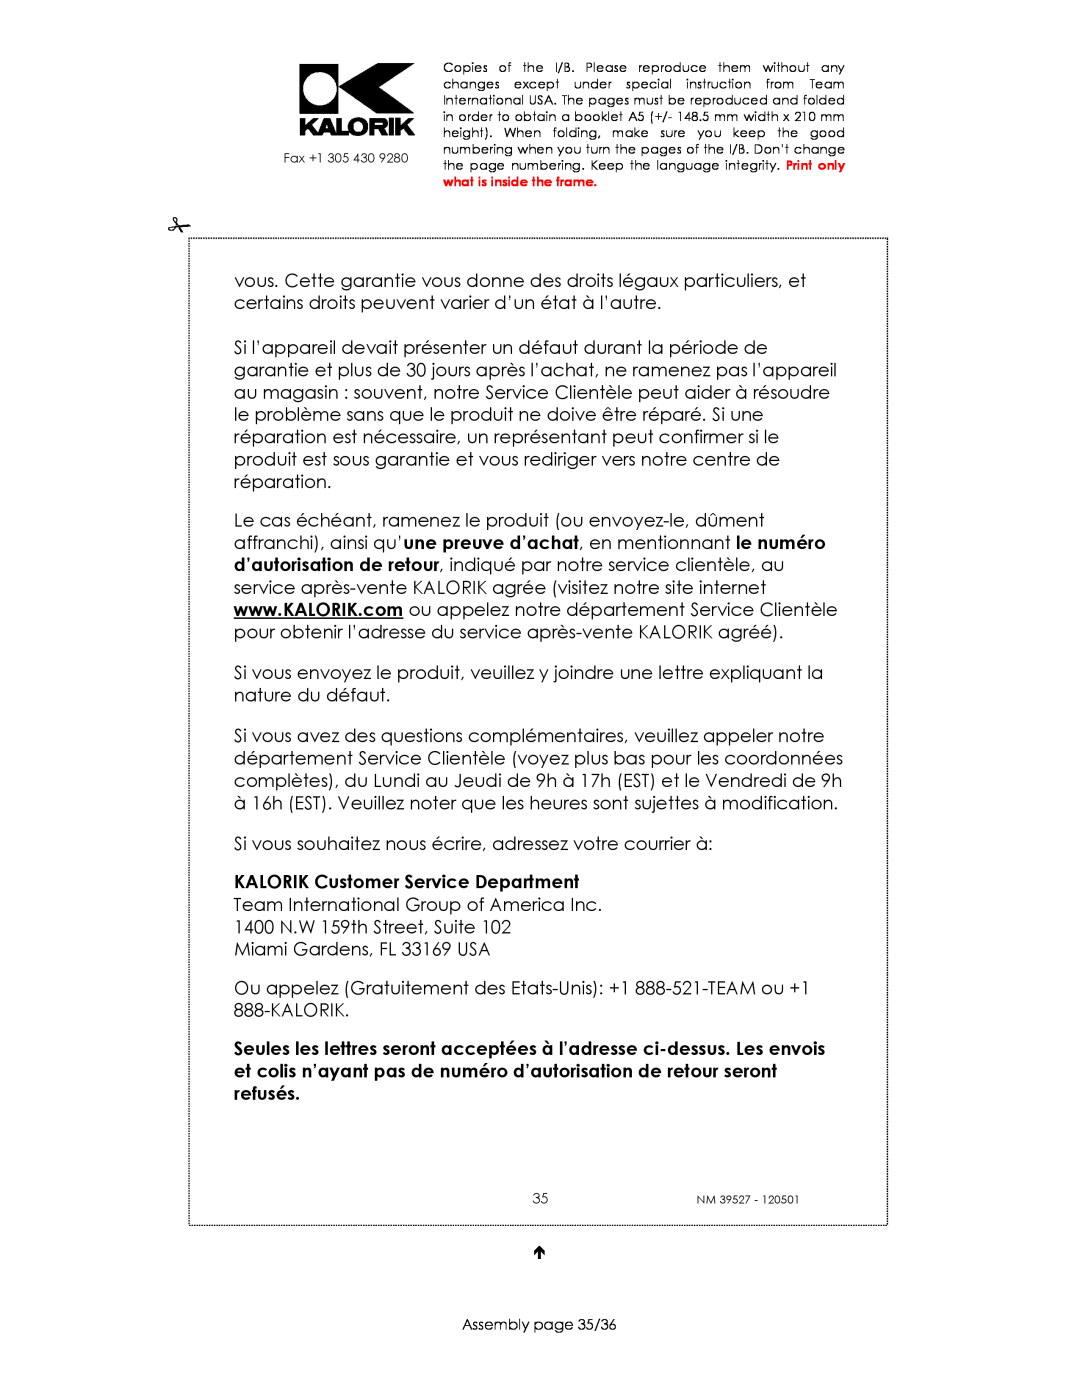 Kalorik NM 39527 manual KALORIK Customer Service Department, Assembly page 35/36 